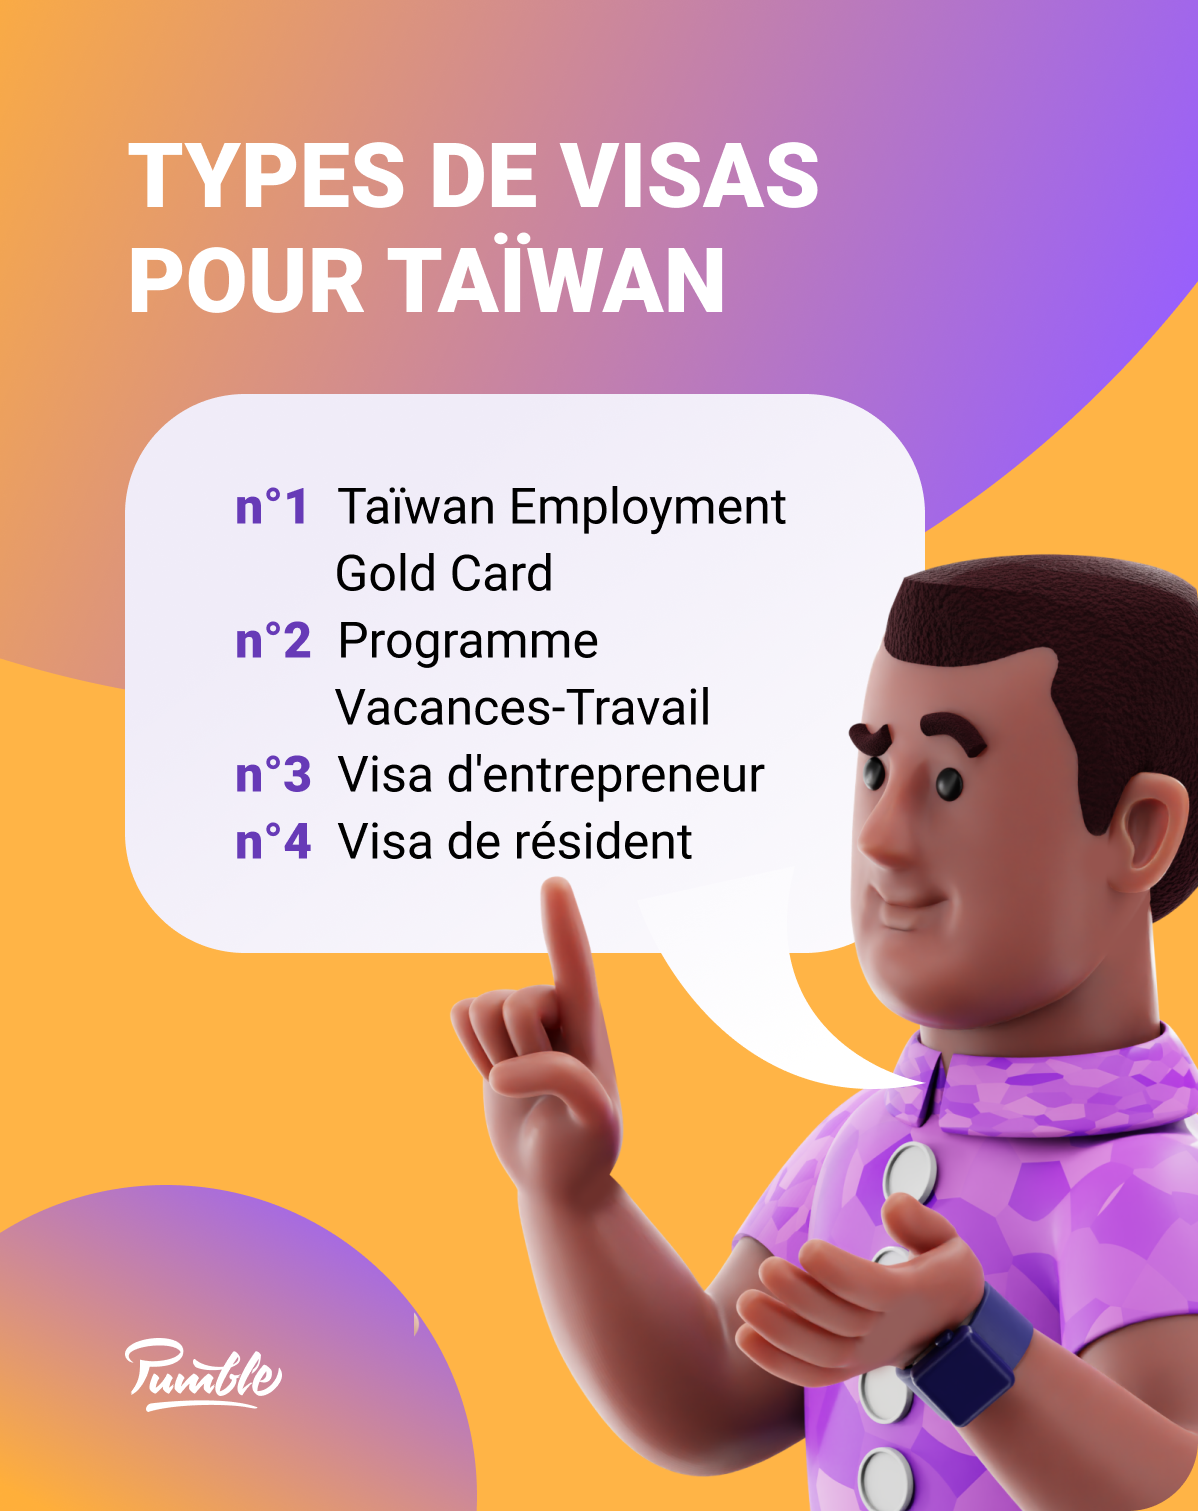 Types of visas in Taiwan